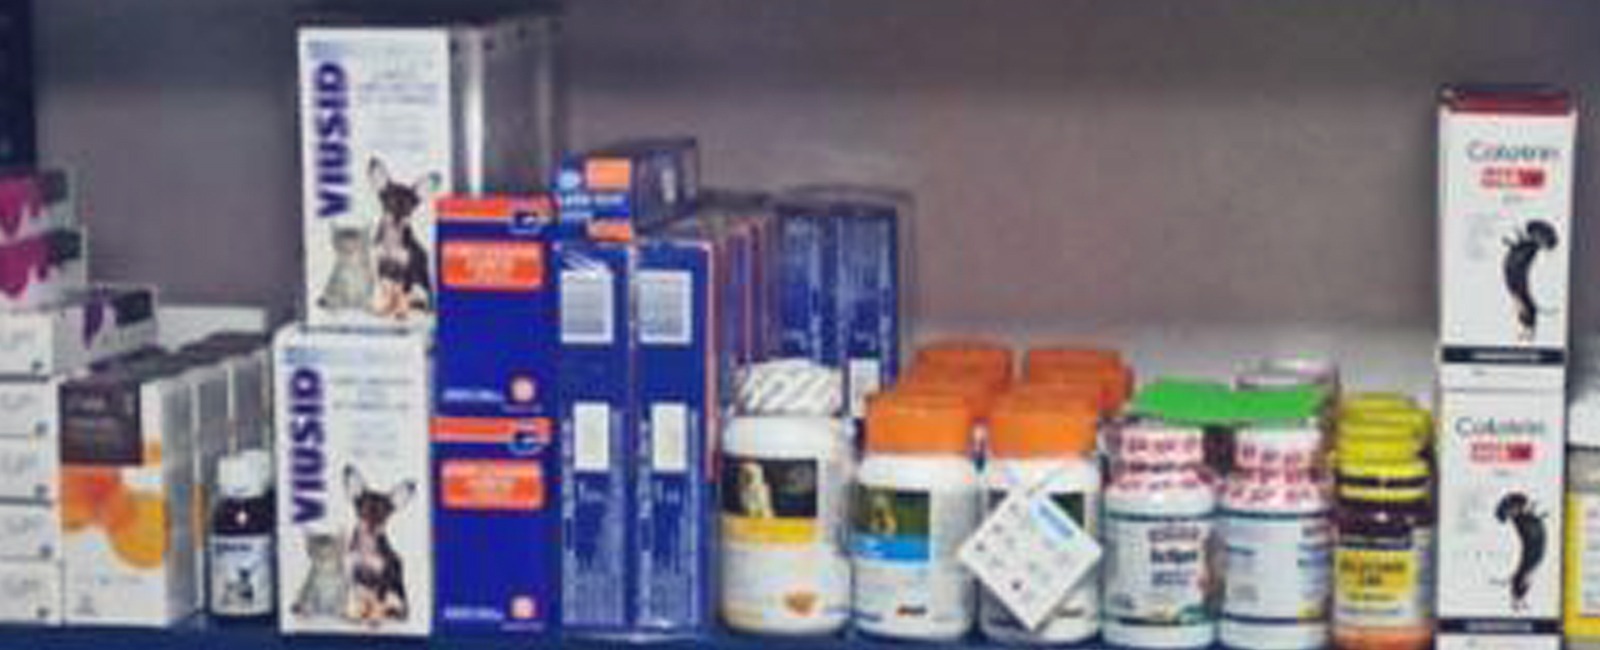 farmacia-servicios001